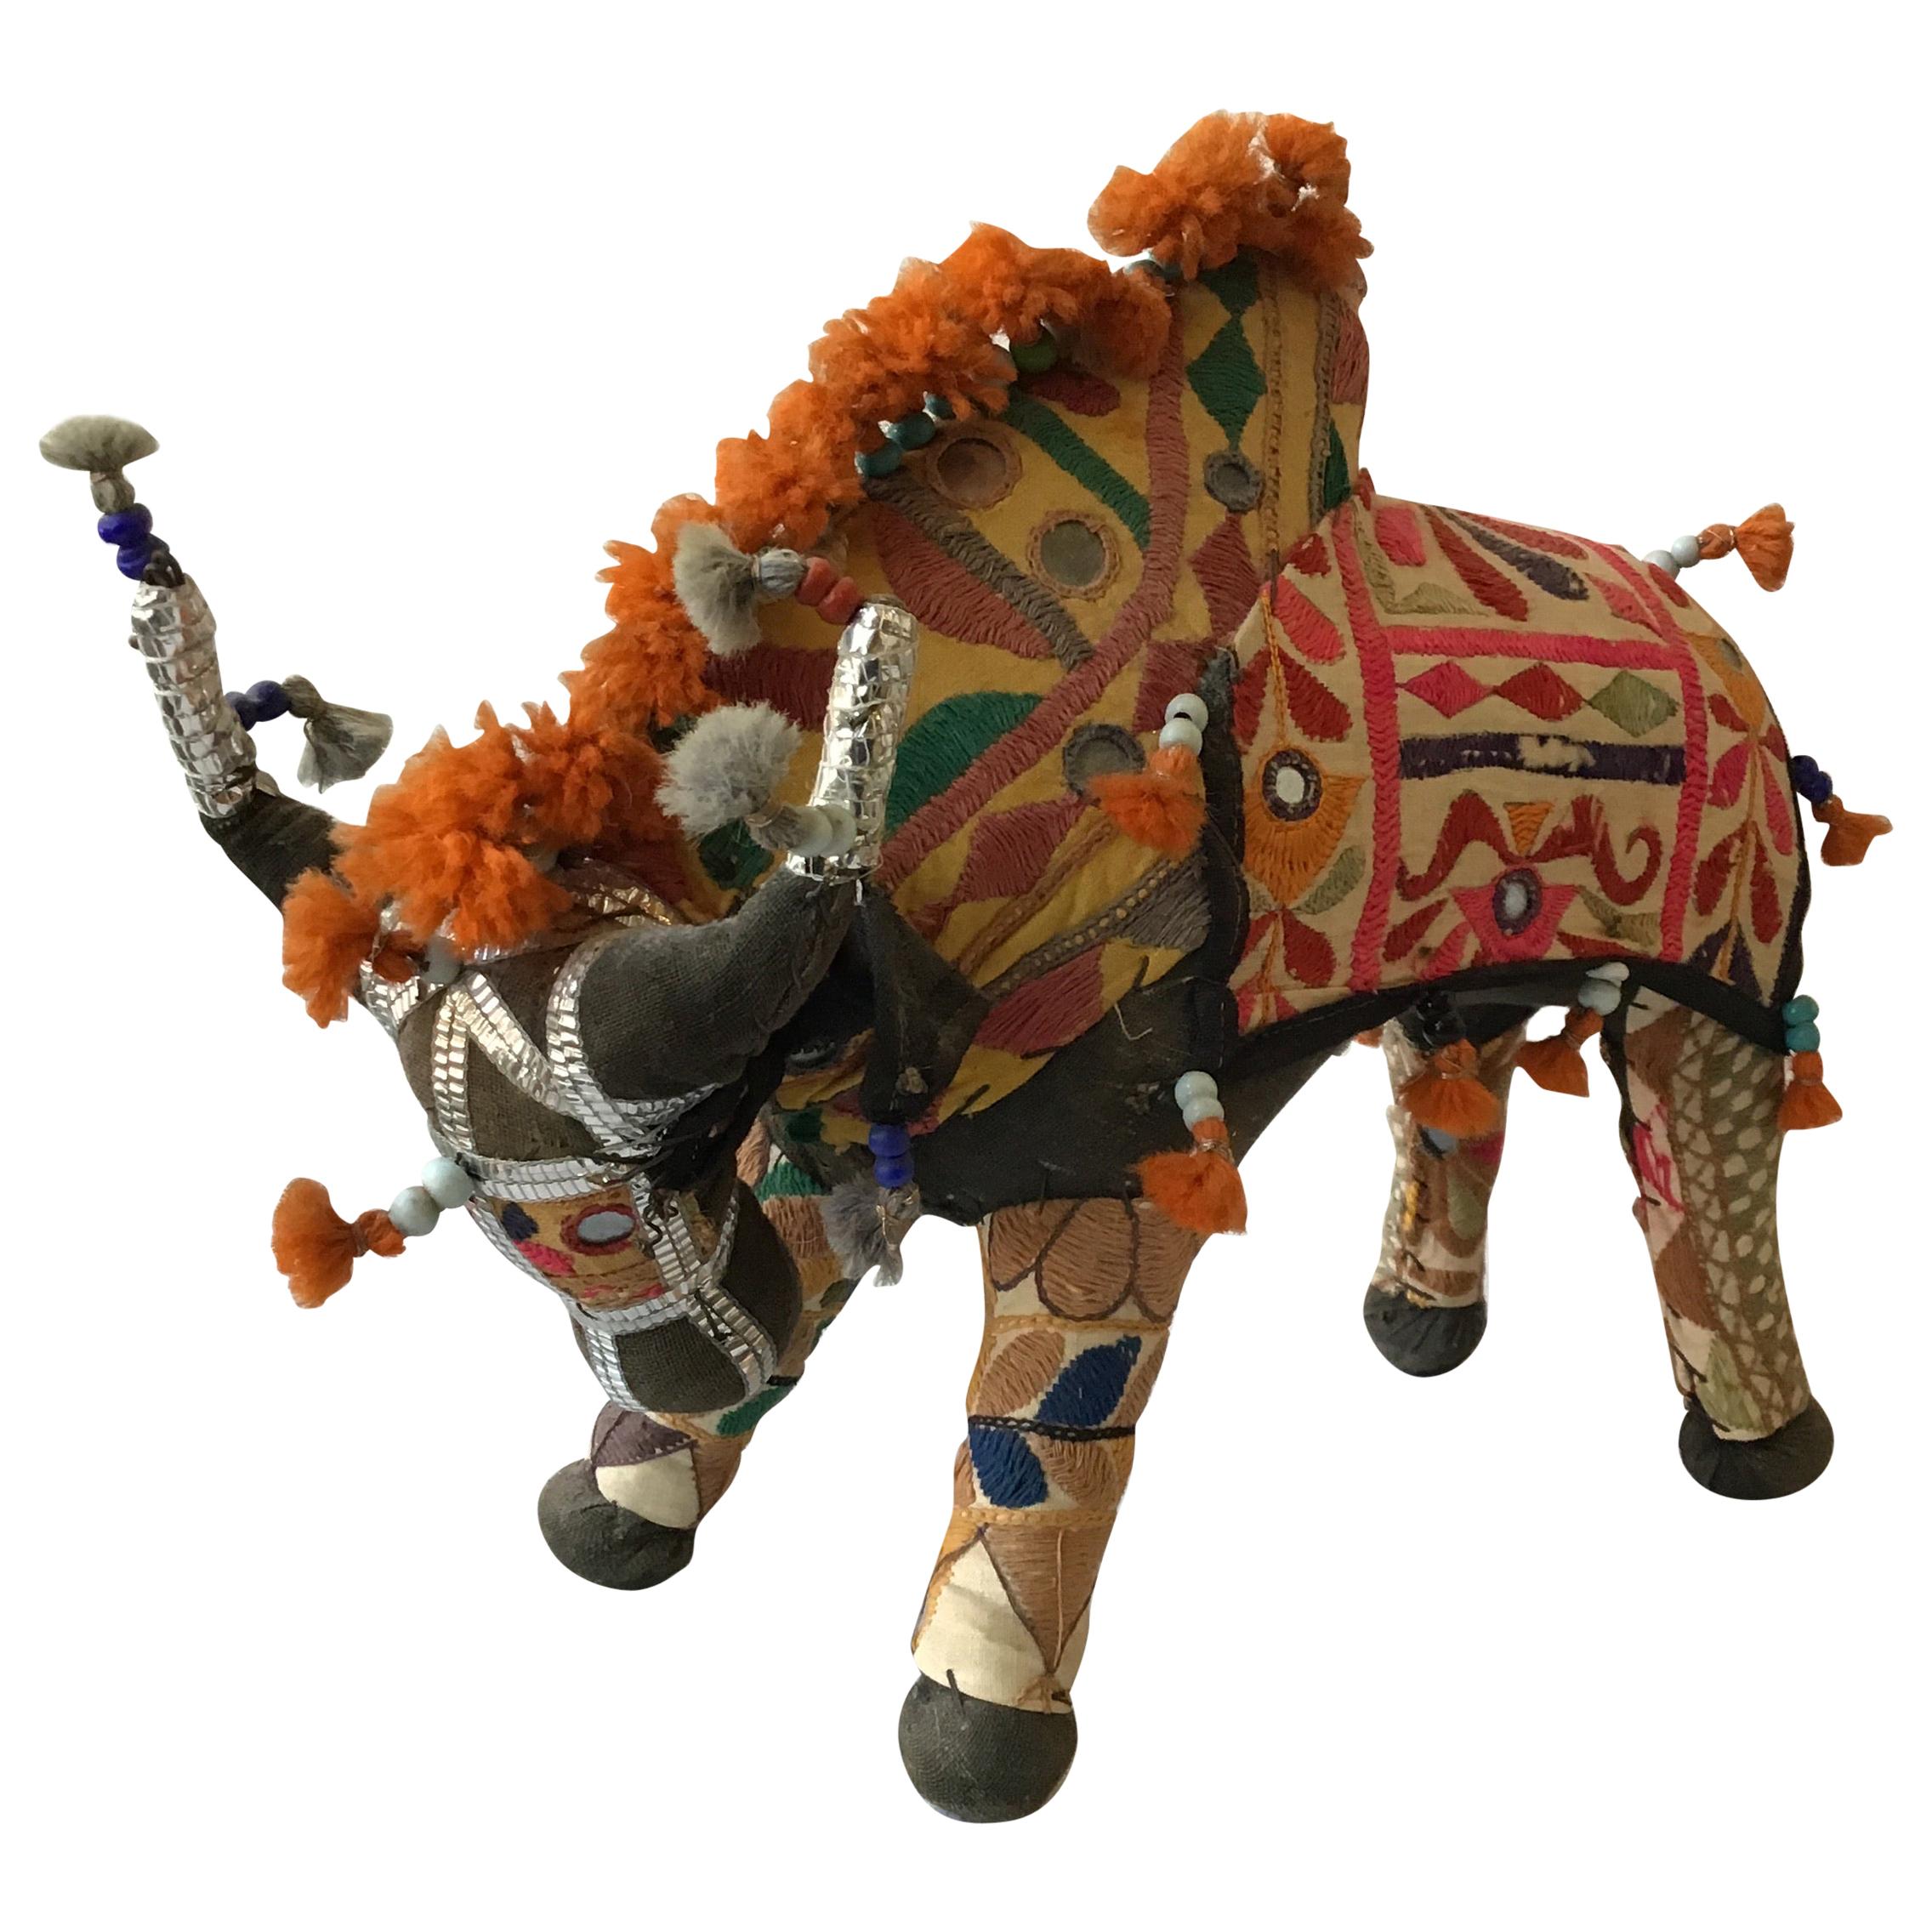 1960s Handmade Stuffed Bull Toy from India